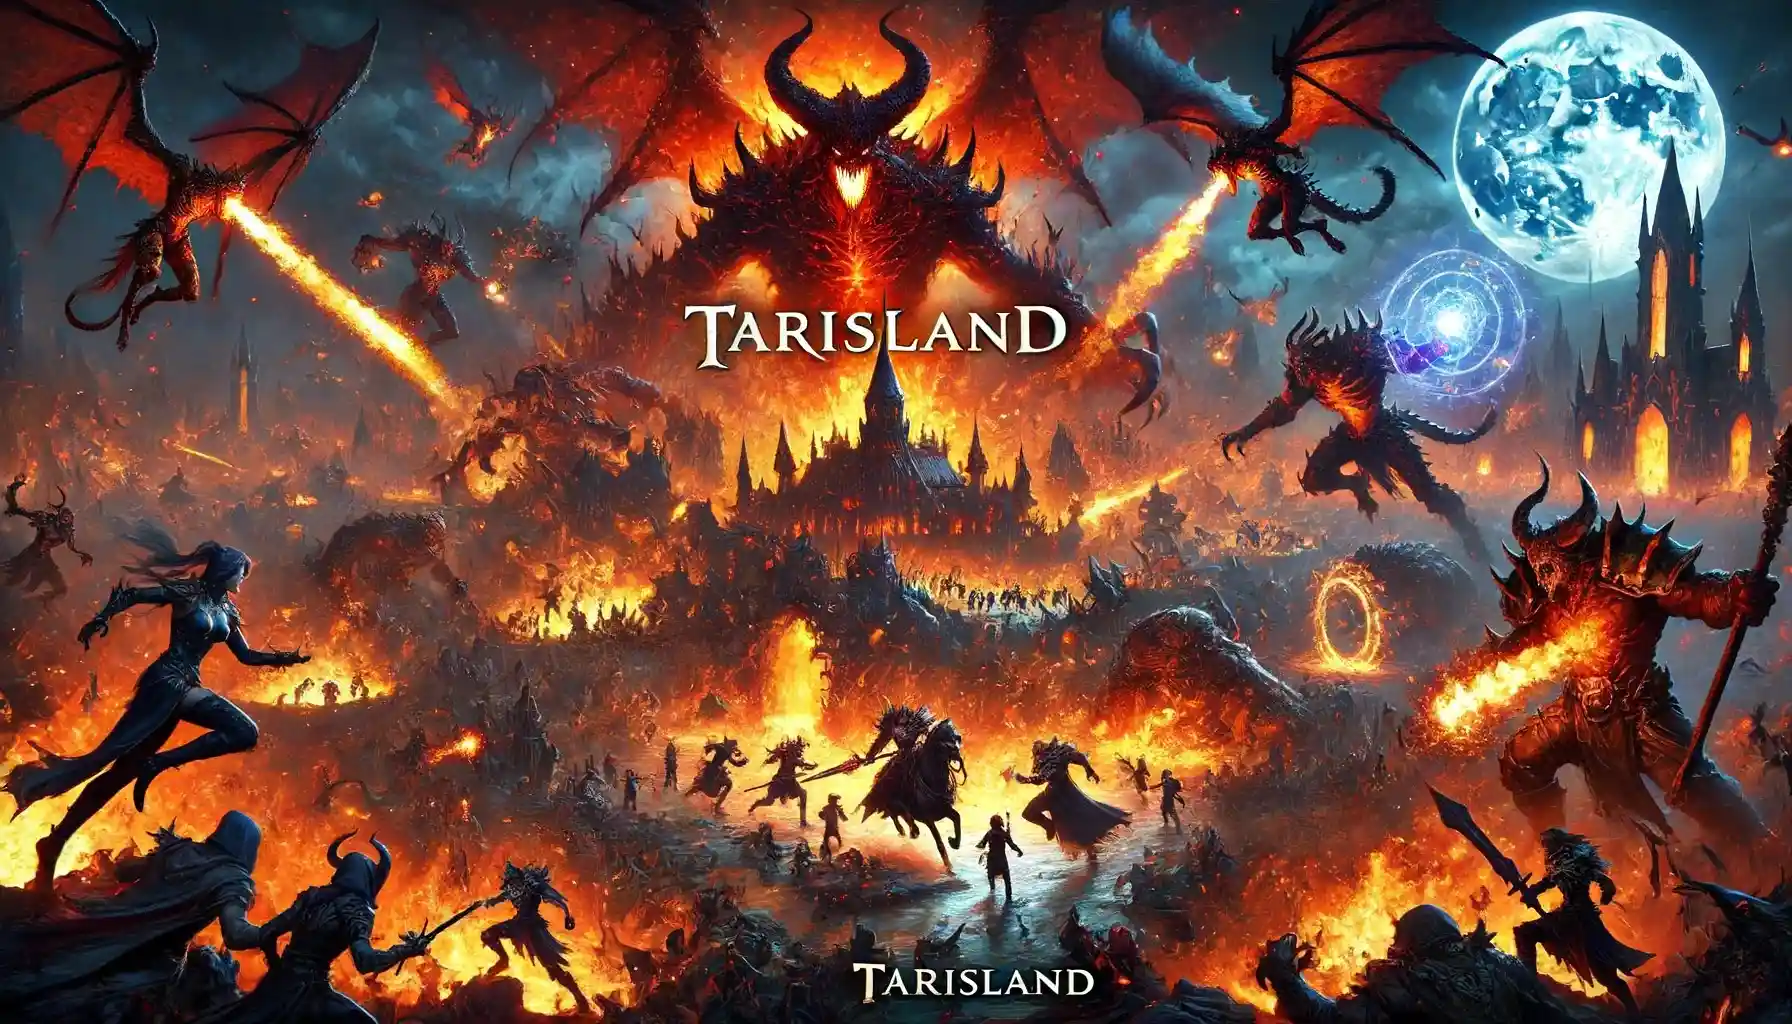 Tarisland Invasion Events